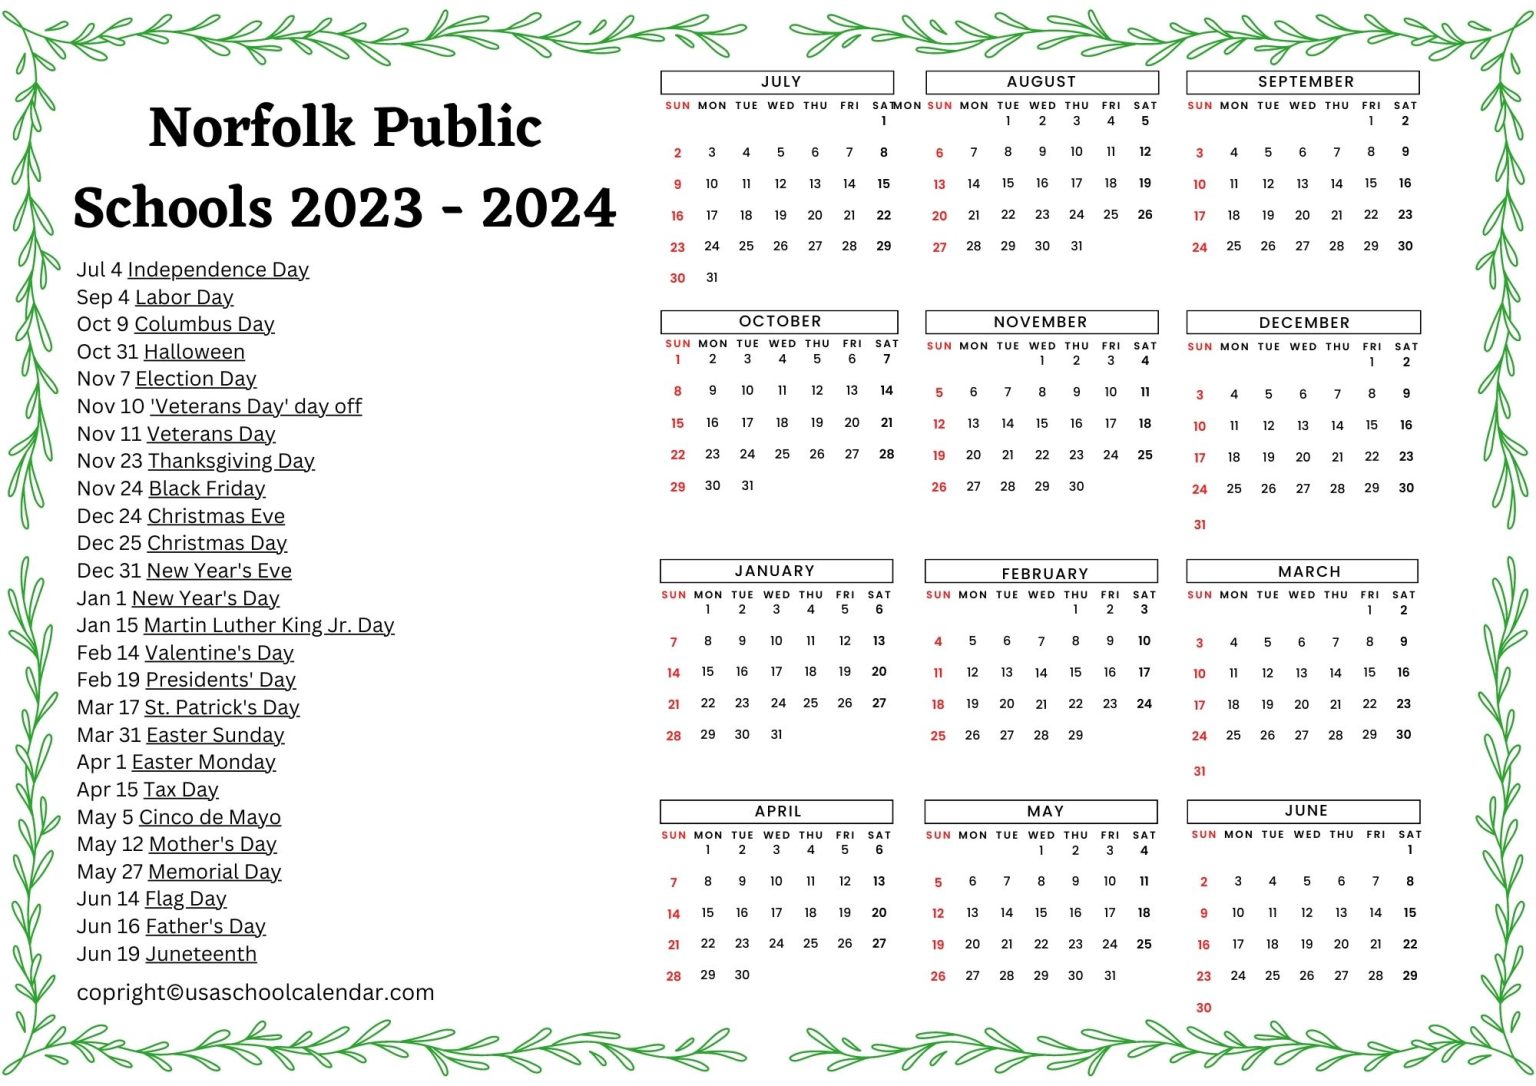 Norfolk Public Schools Calendar Holidays 2023 2024